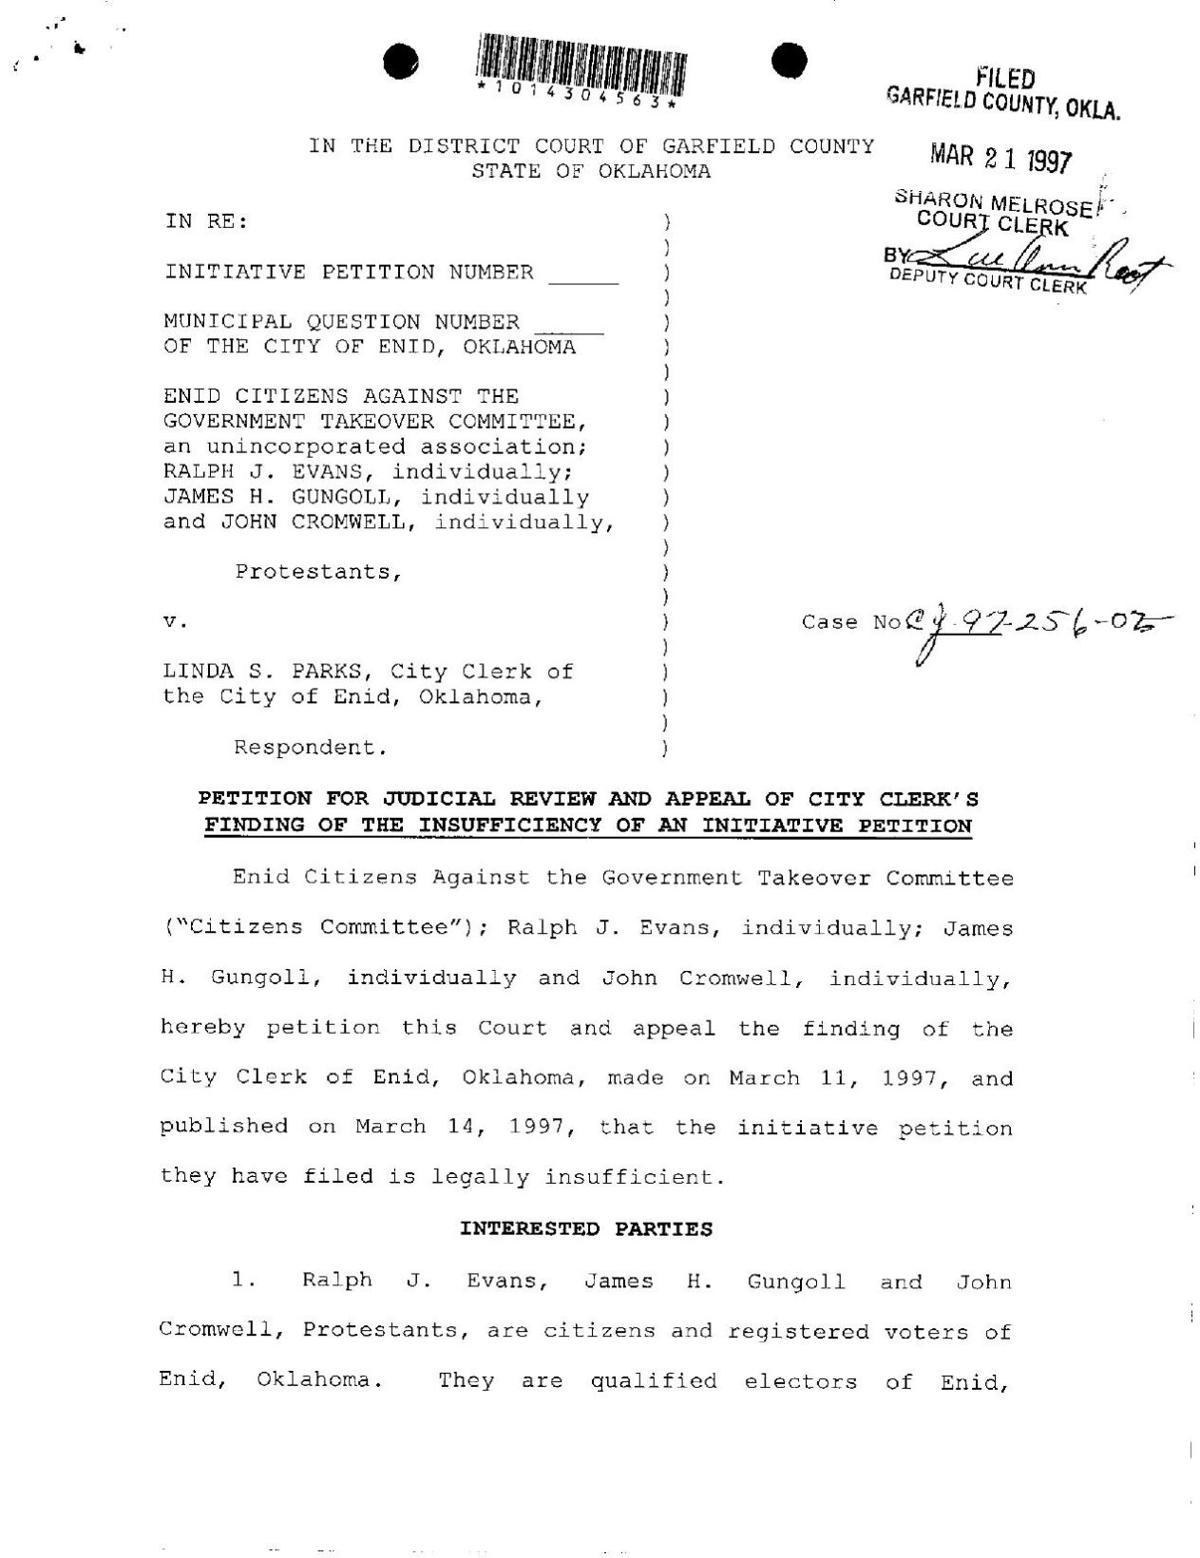 1997 petition against Enid city clerk